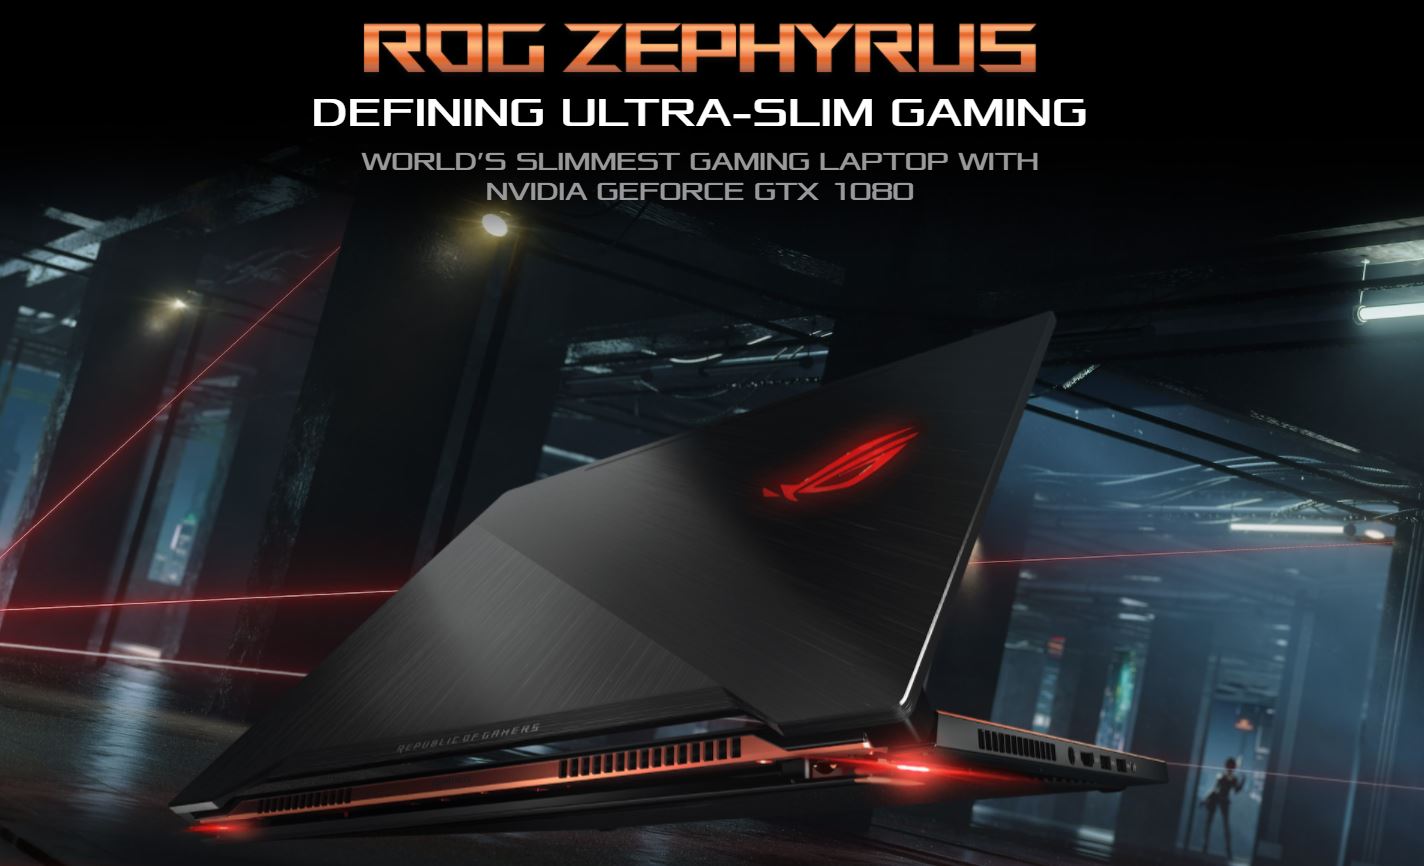 ASUS ROG Zephyrus gaming laptop - Credit by ASUS